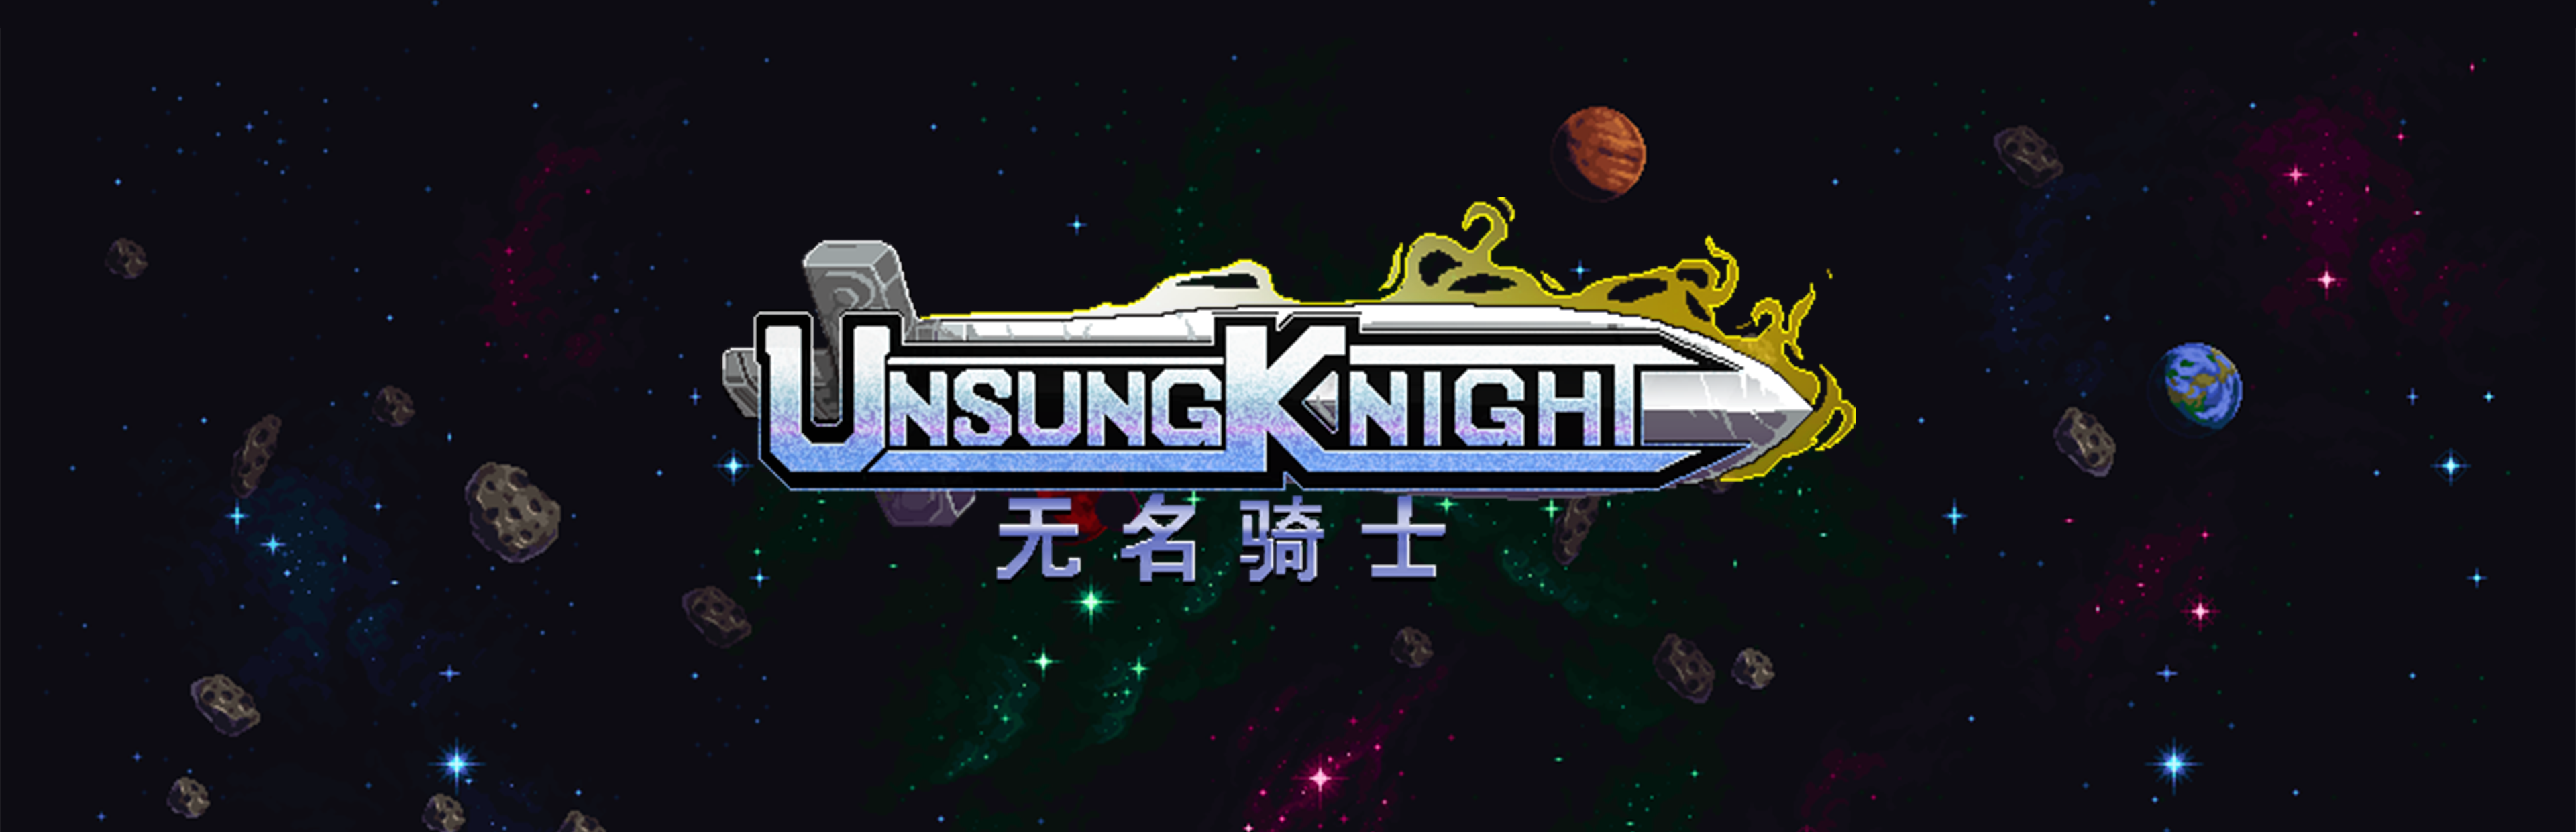 Unsung Knight (无名骑士)